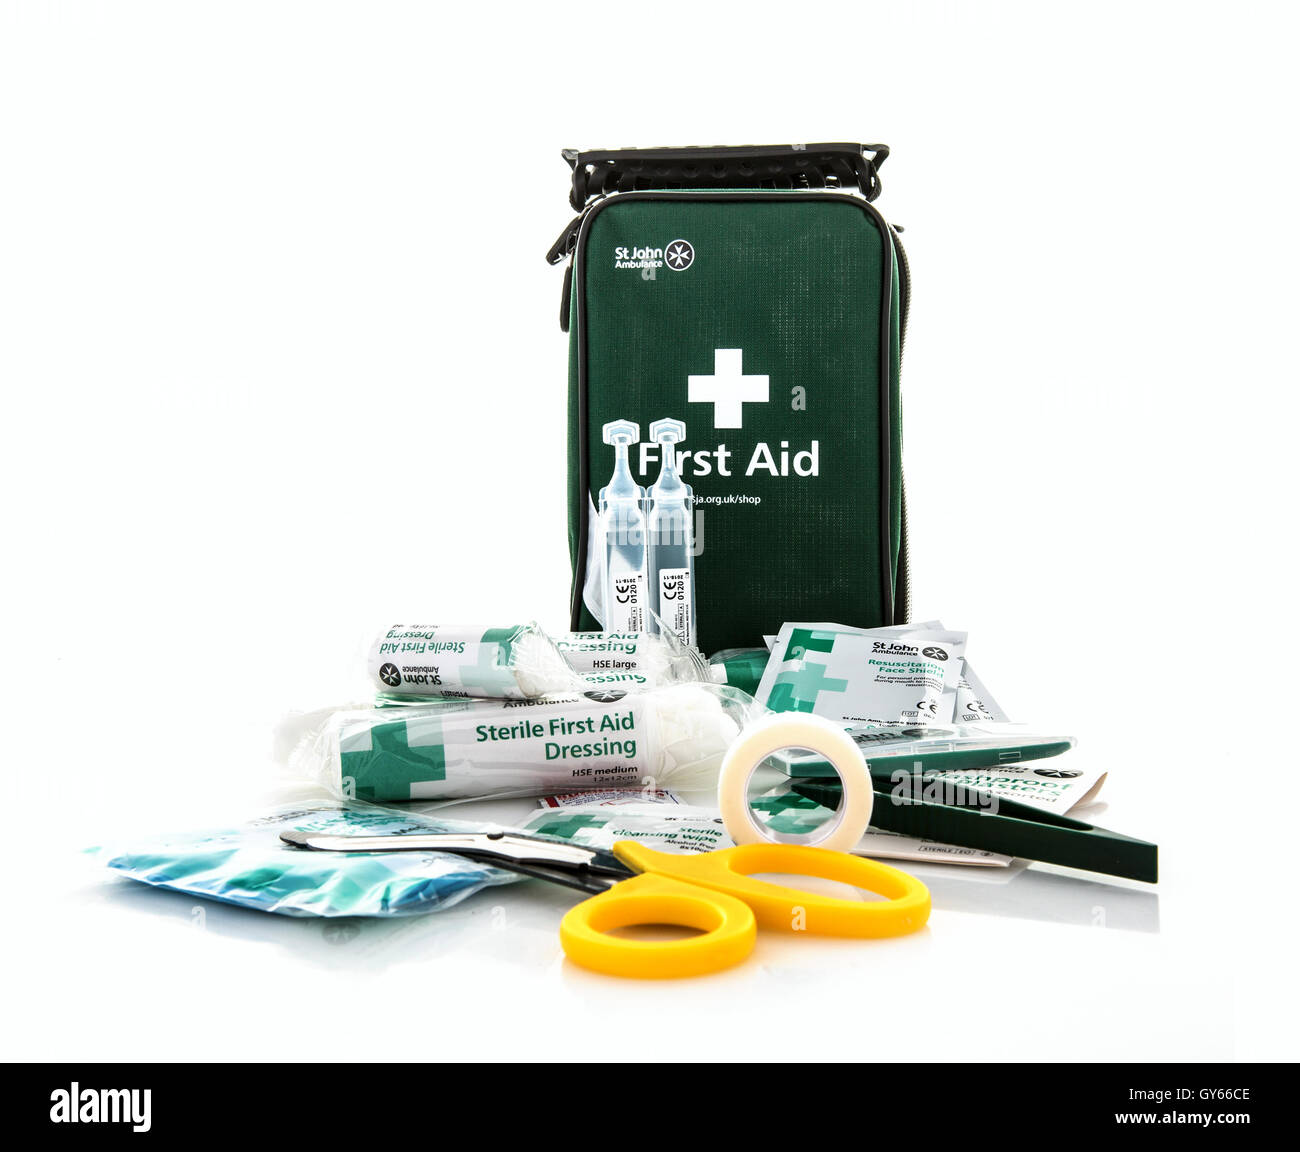 St John Ambulance First Aid Kit on a white background Stock Photo